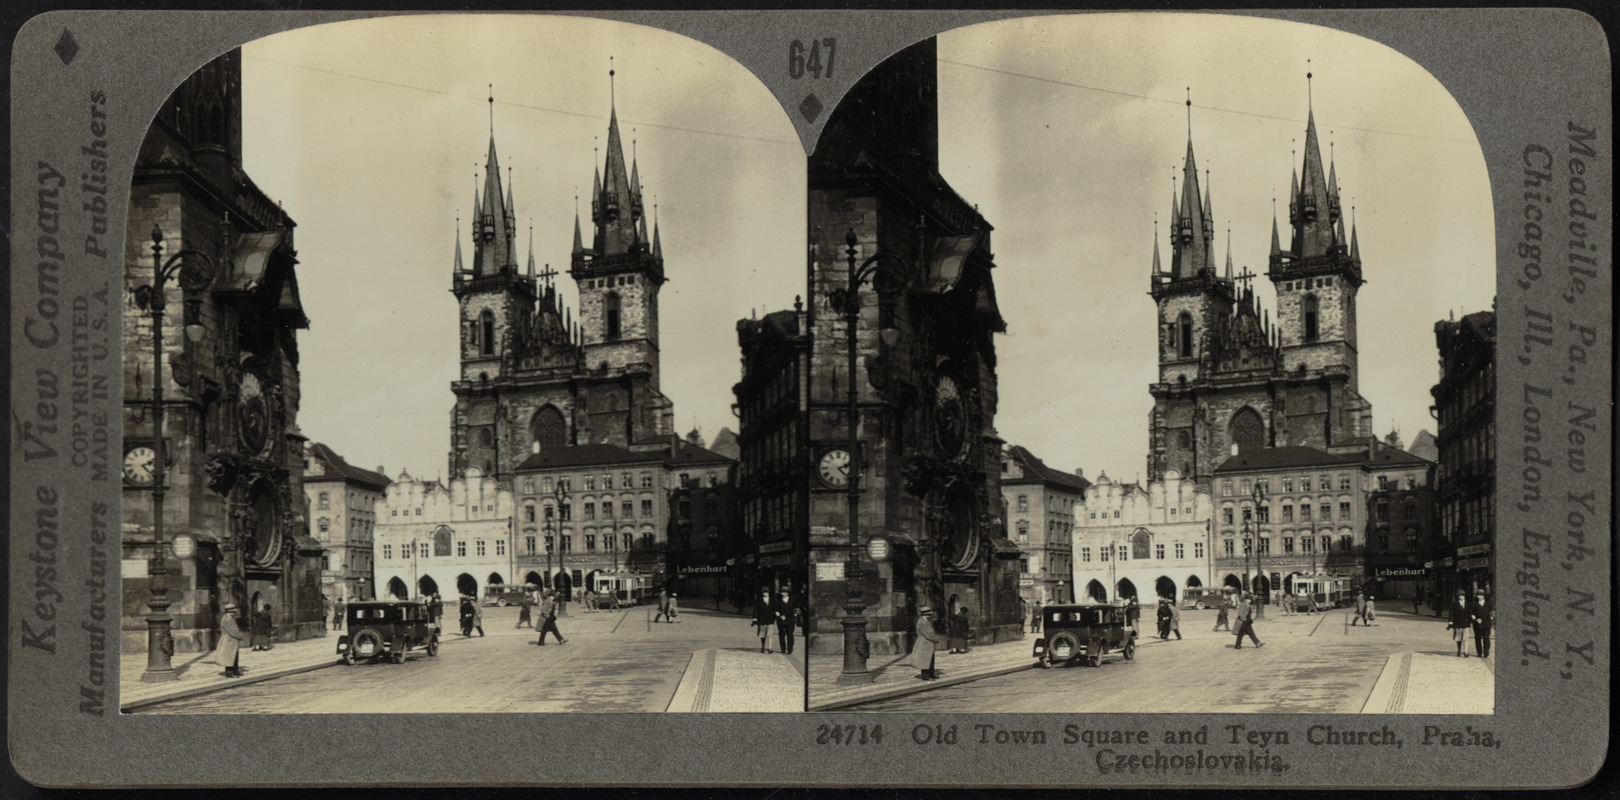 Old town square and Teyn Church, Prague, Czechoslovakia